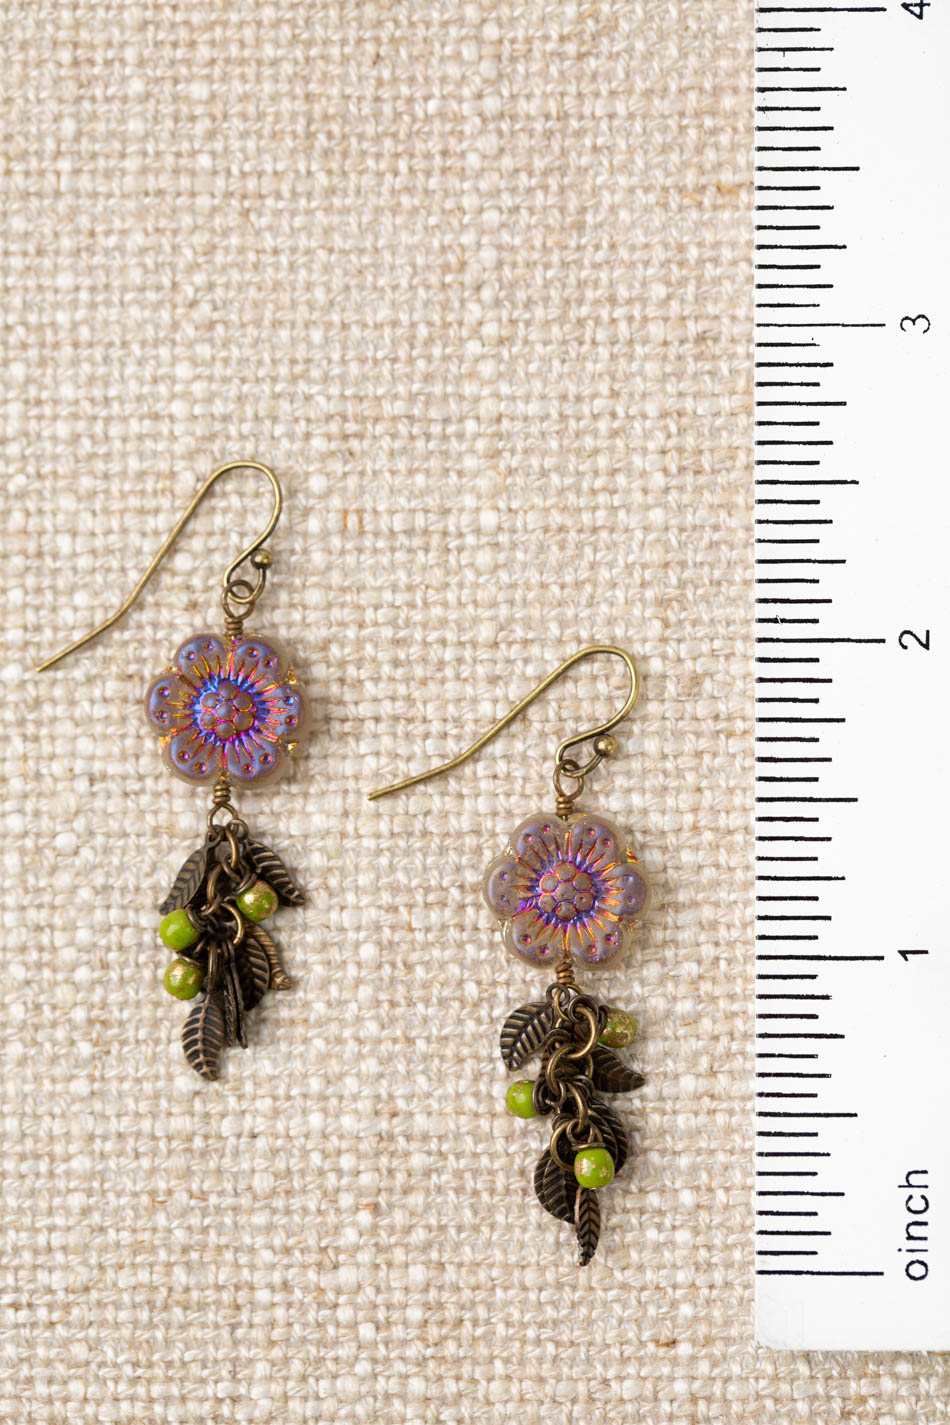 Translucent Wire Flower Threader Earrings